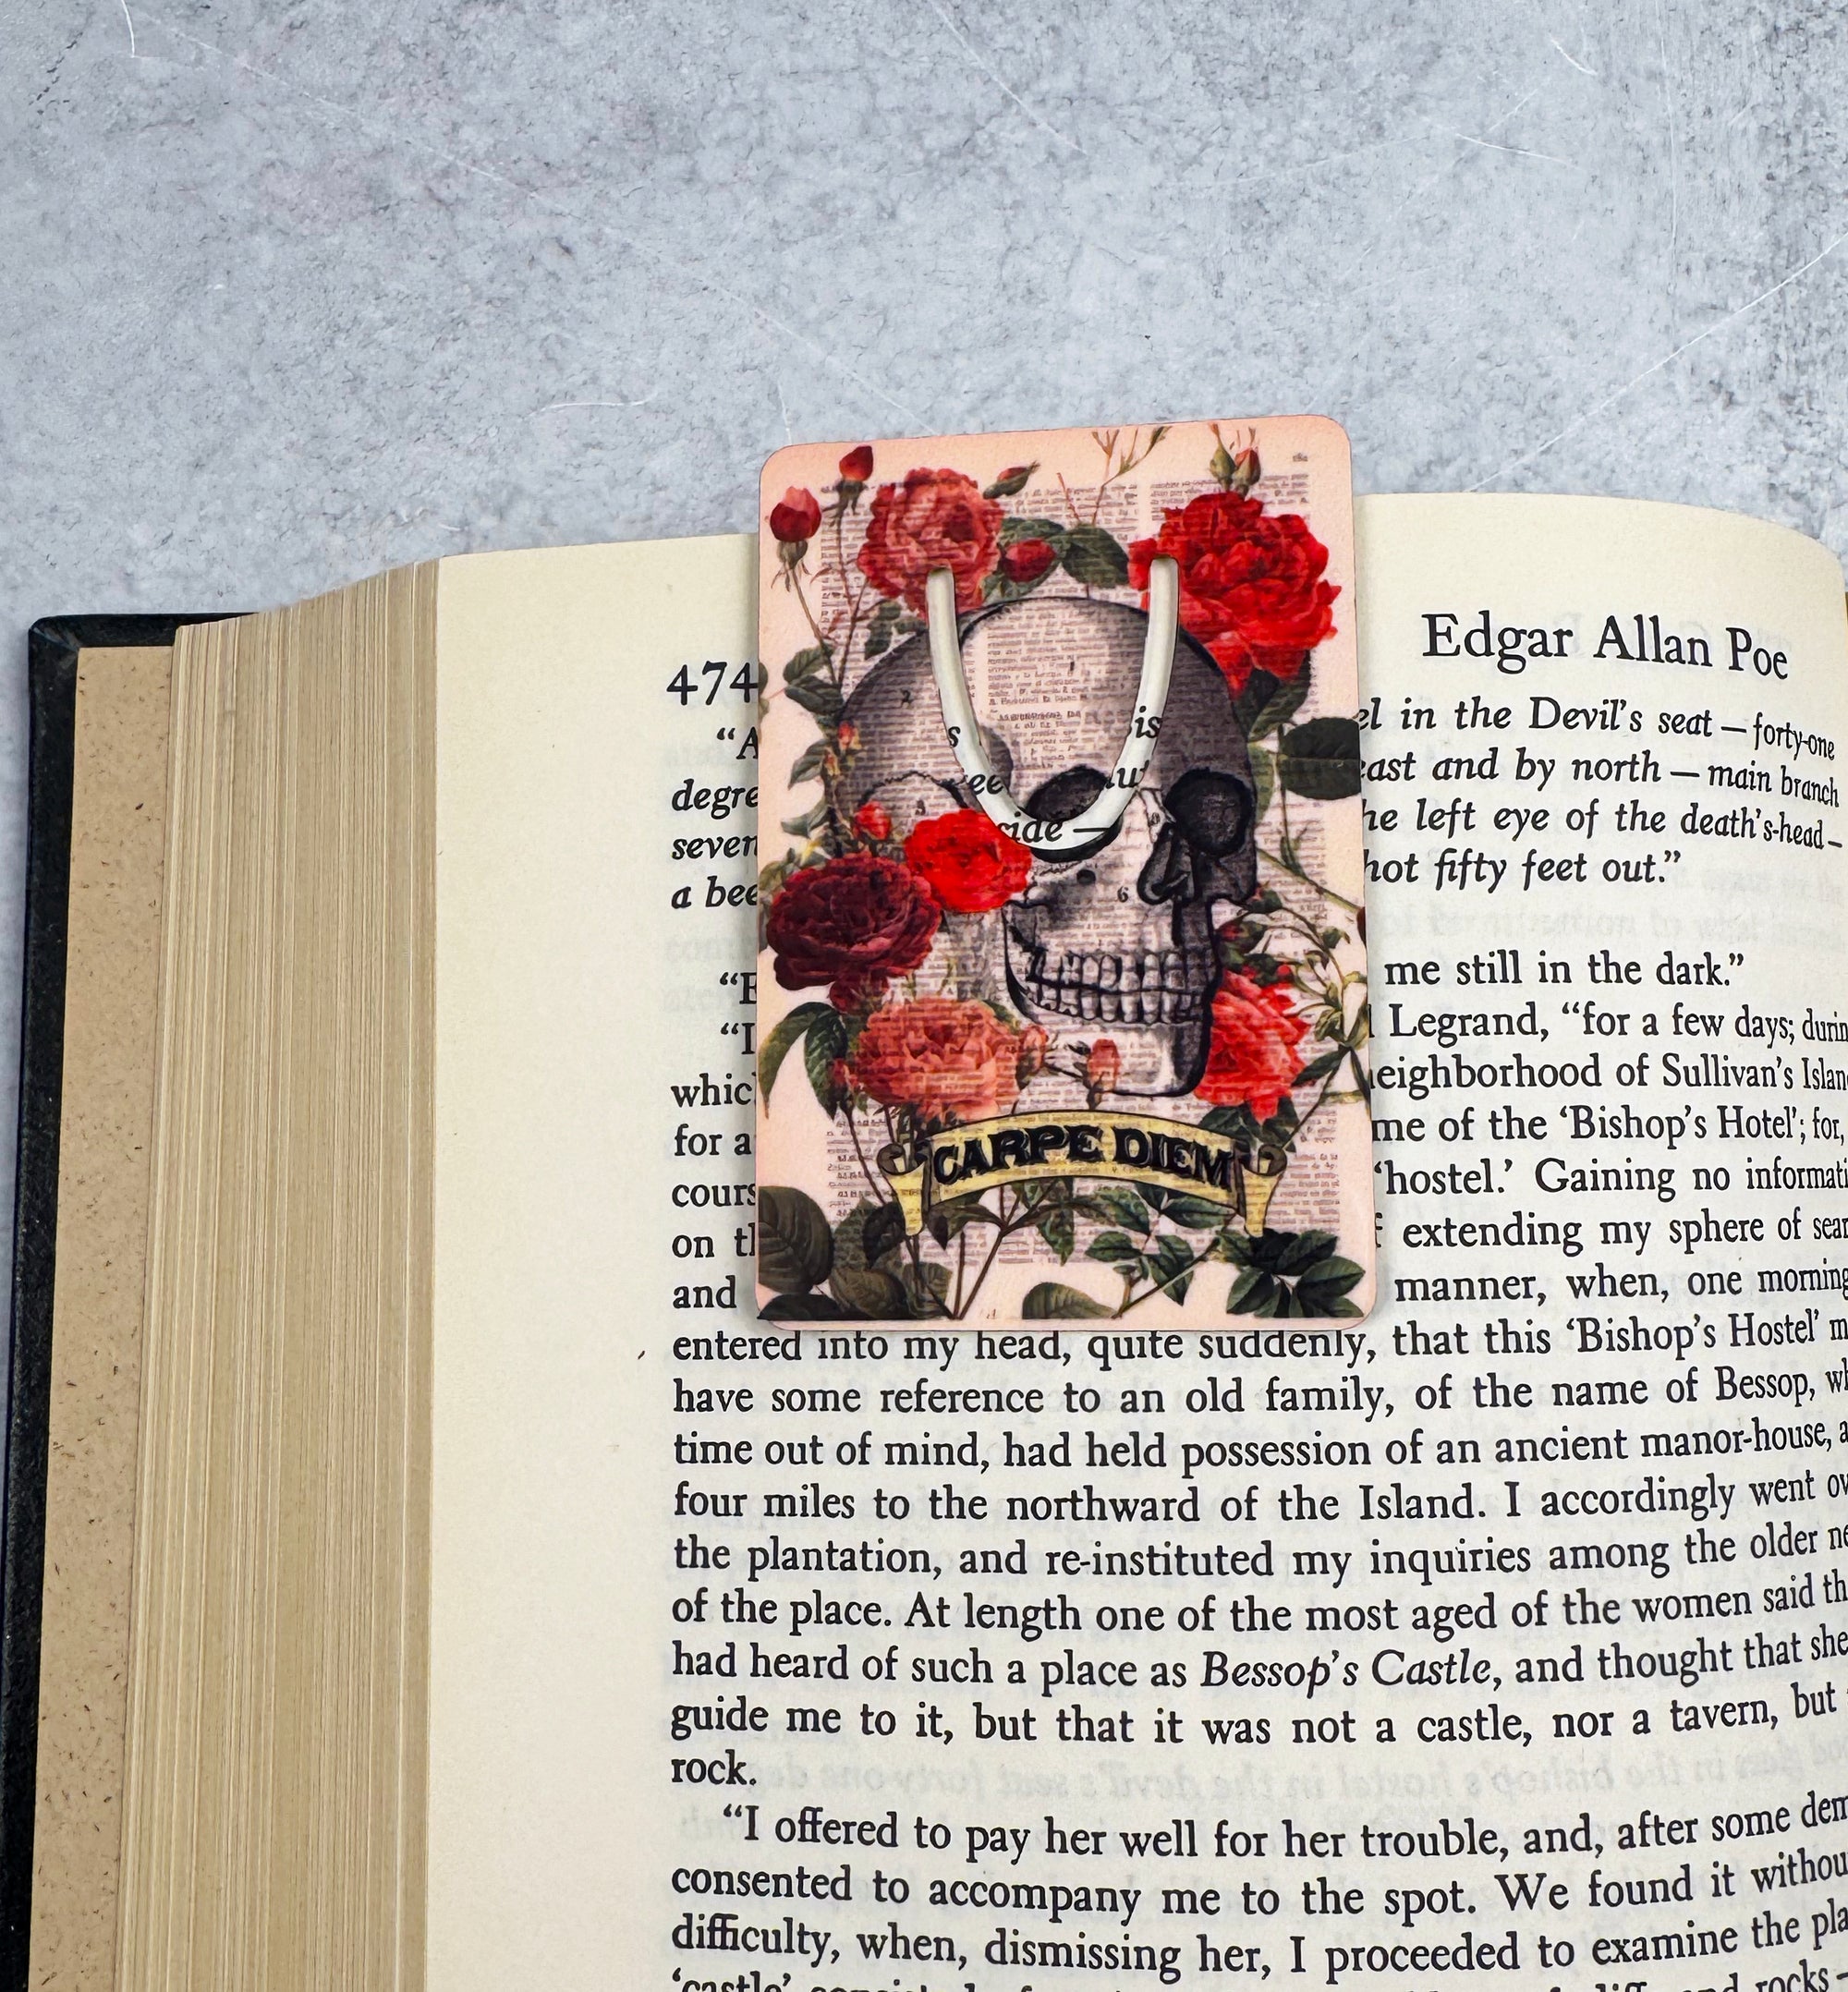 Carpe Diem Skull and Flowers Metal Bookmark